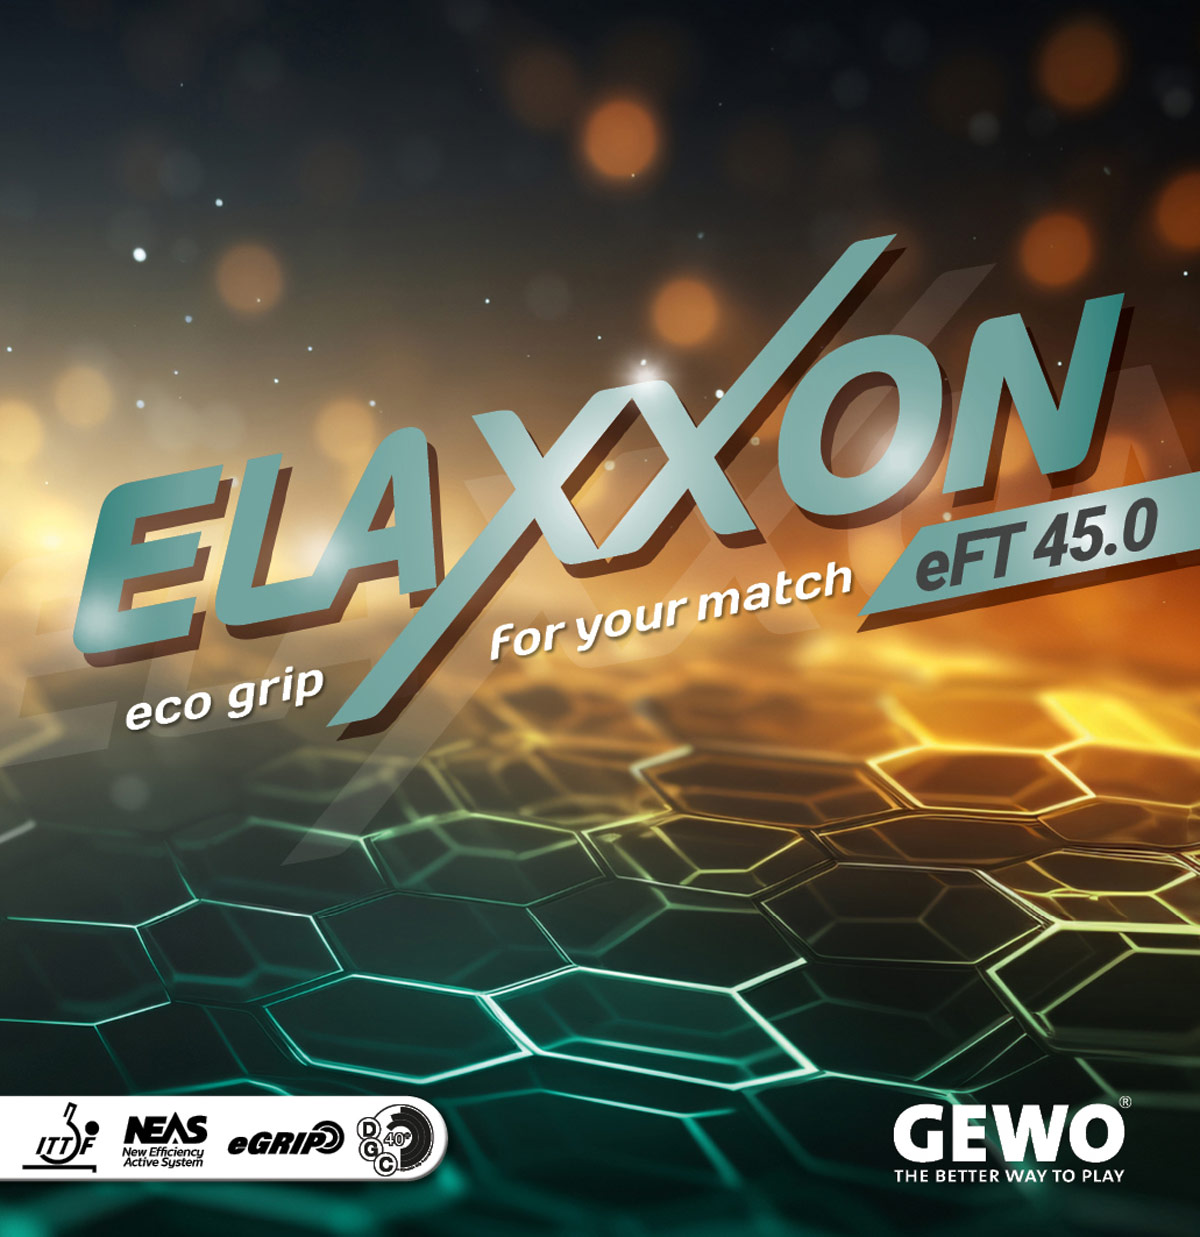 GEWO Rubber Elaxxon eFT 45.0 red 2,3 mm